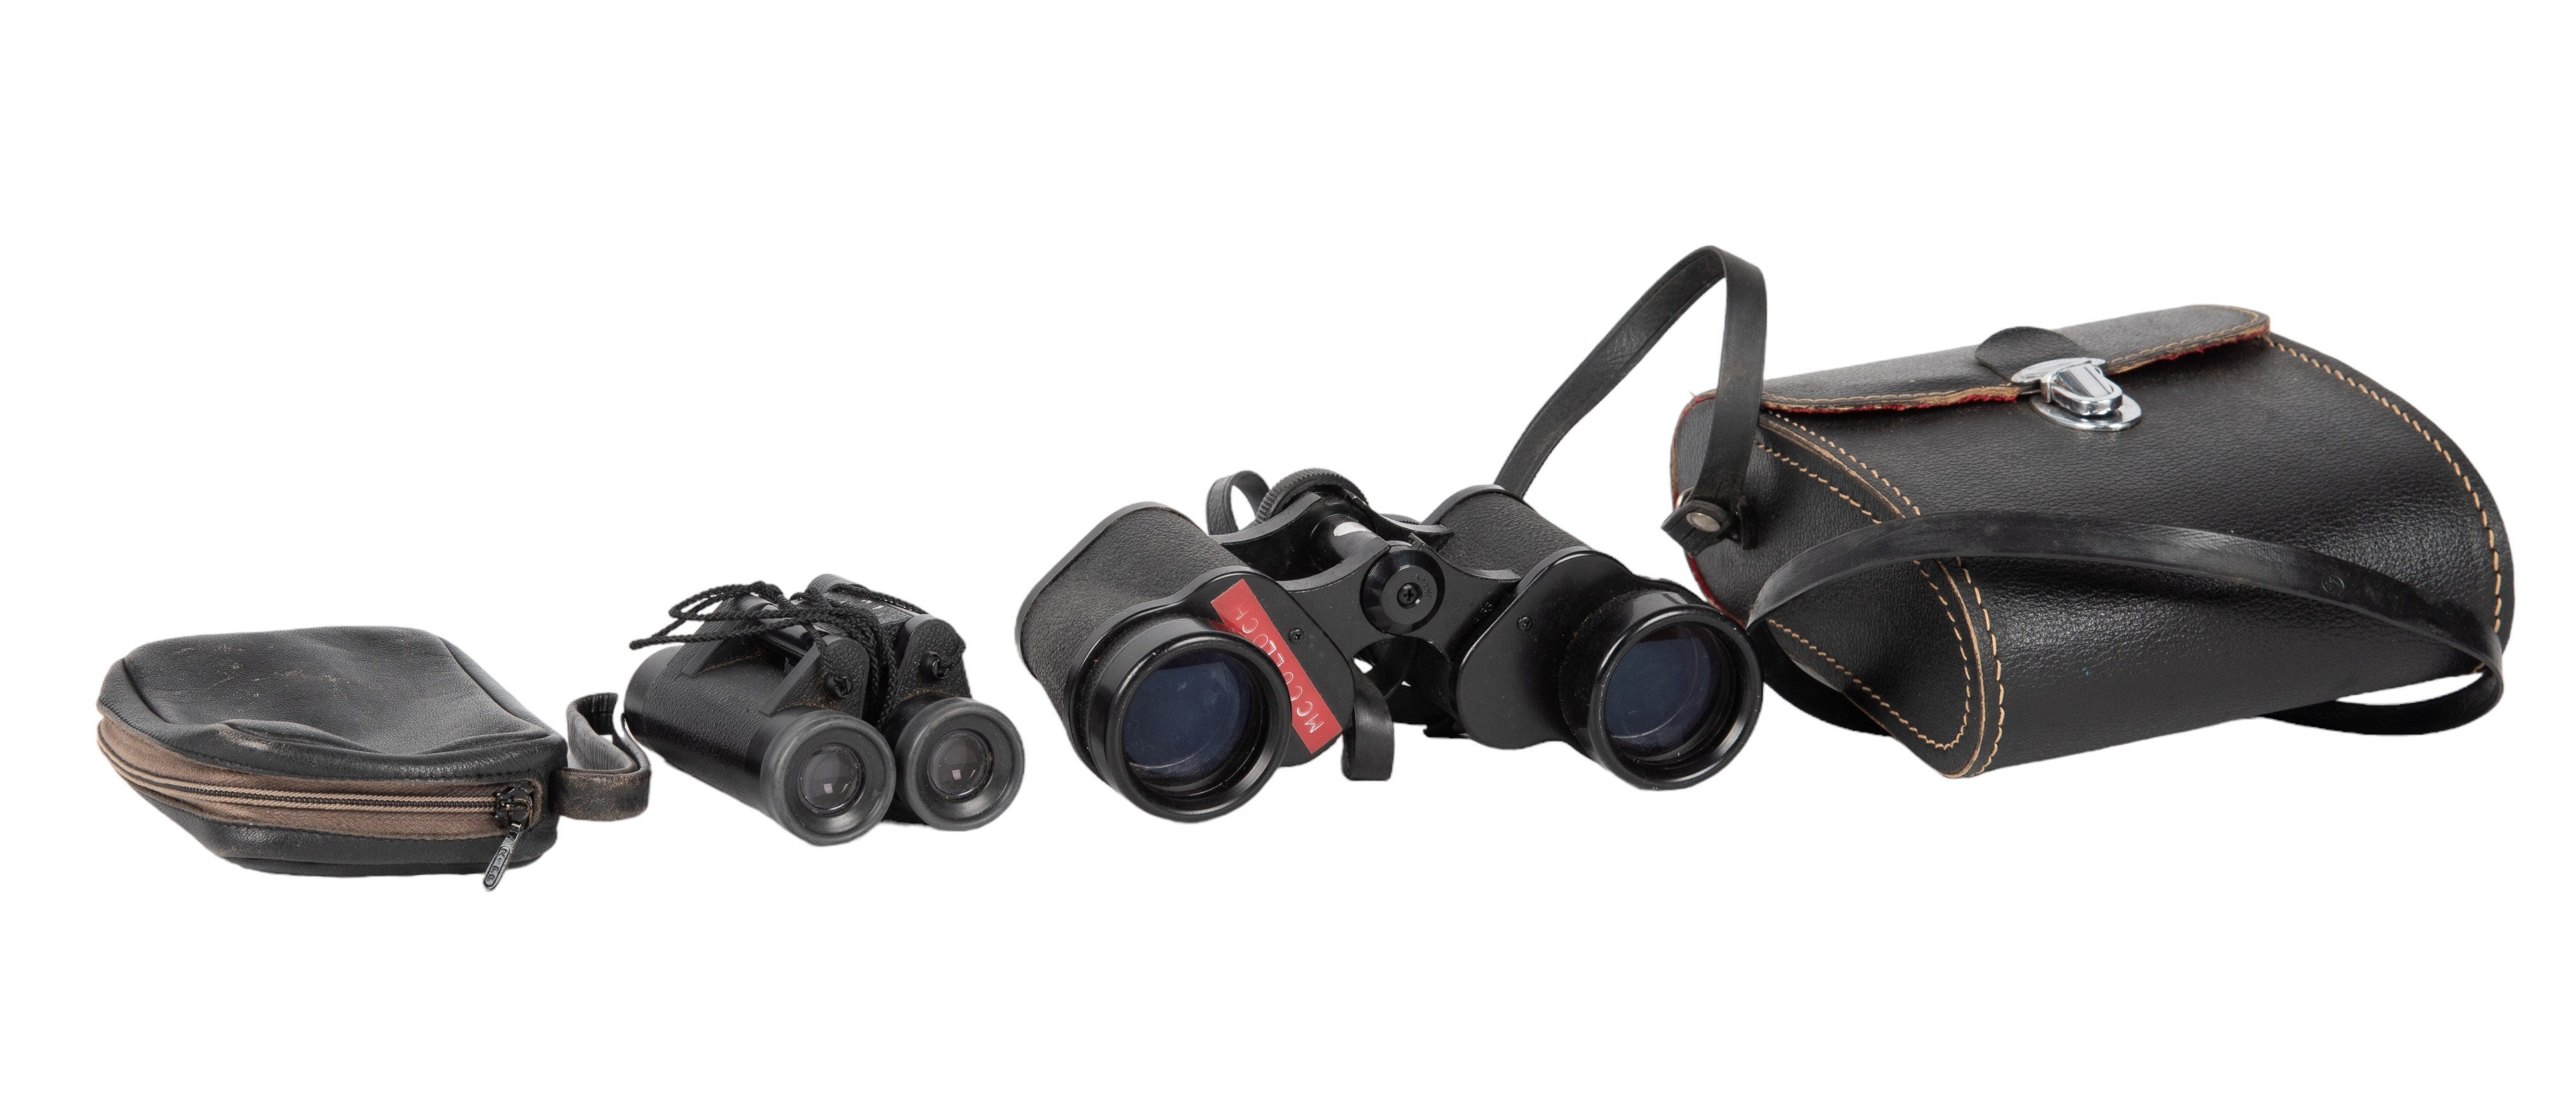 (2) Pair binoculars, c/o Zeiss